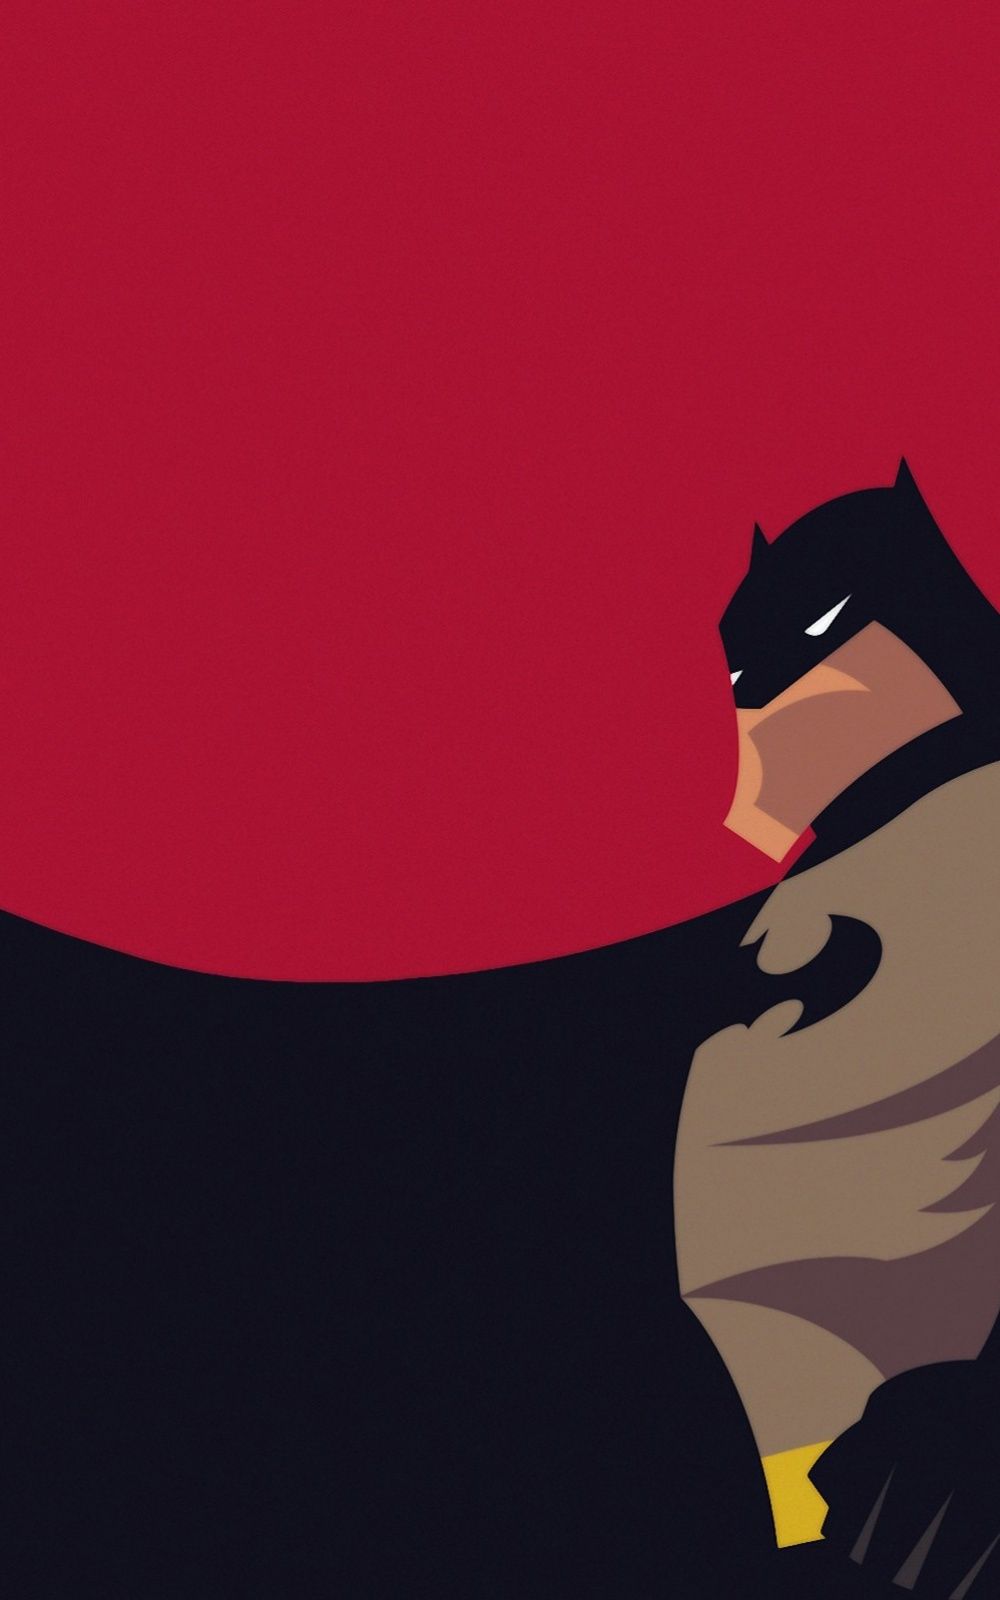 Batman iPhone Wallpaper HD Wallpaper For Android Wallpaper & Background Download